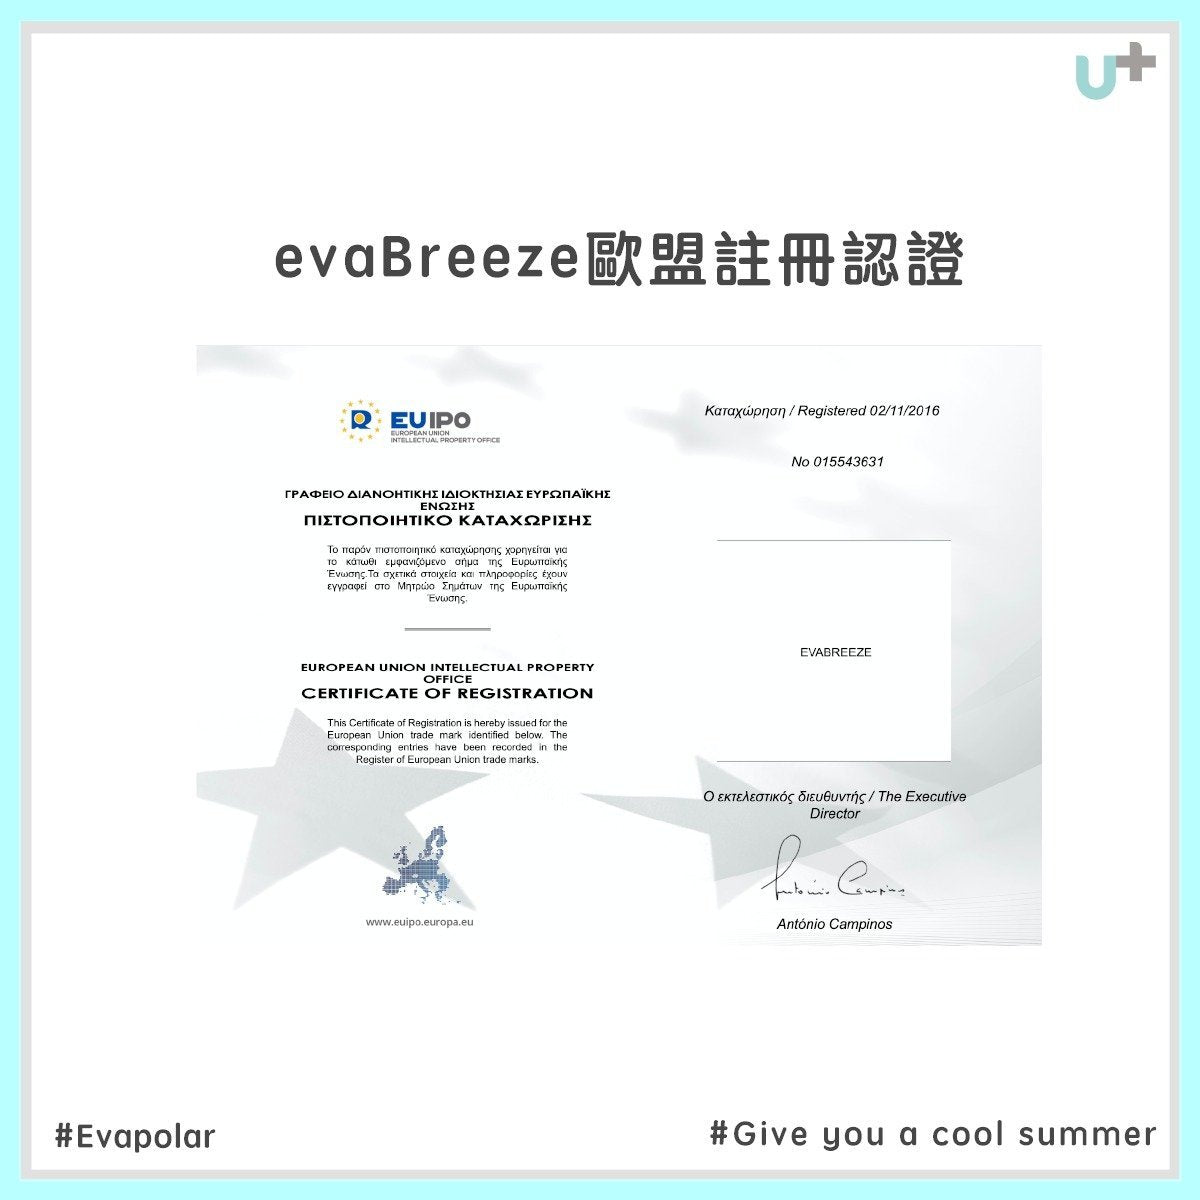 Evapolar - EvaLightPlus EV-1500 Small Mobile Air Conditioner 4th Generation - Black [Licensed in Hong Kong]